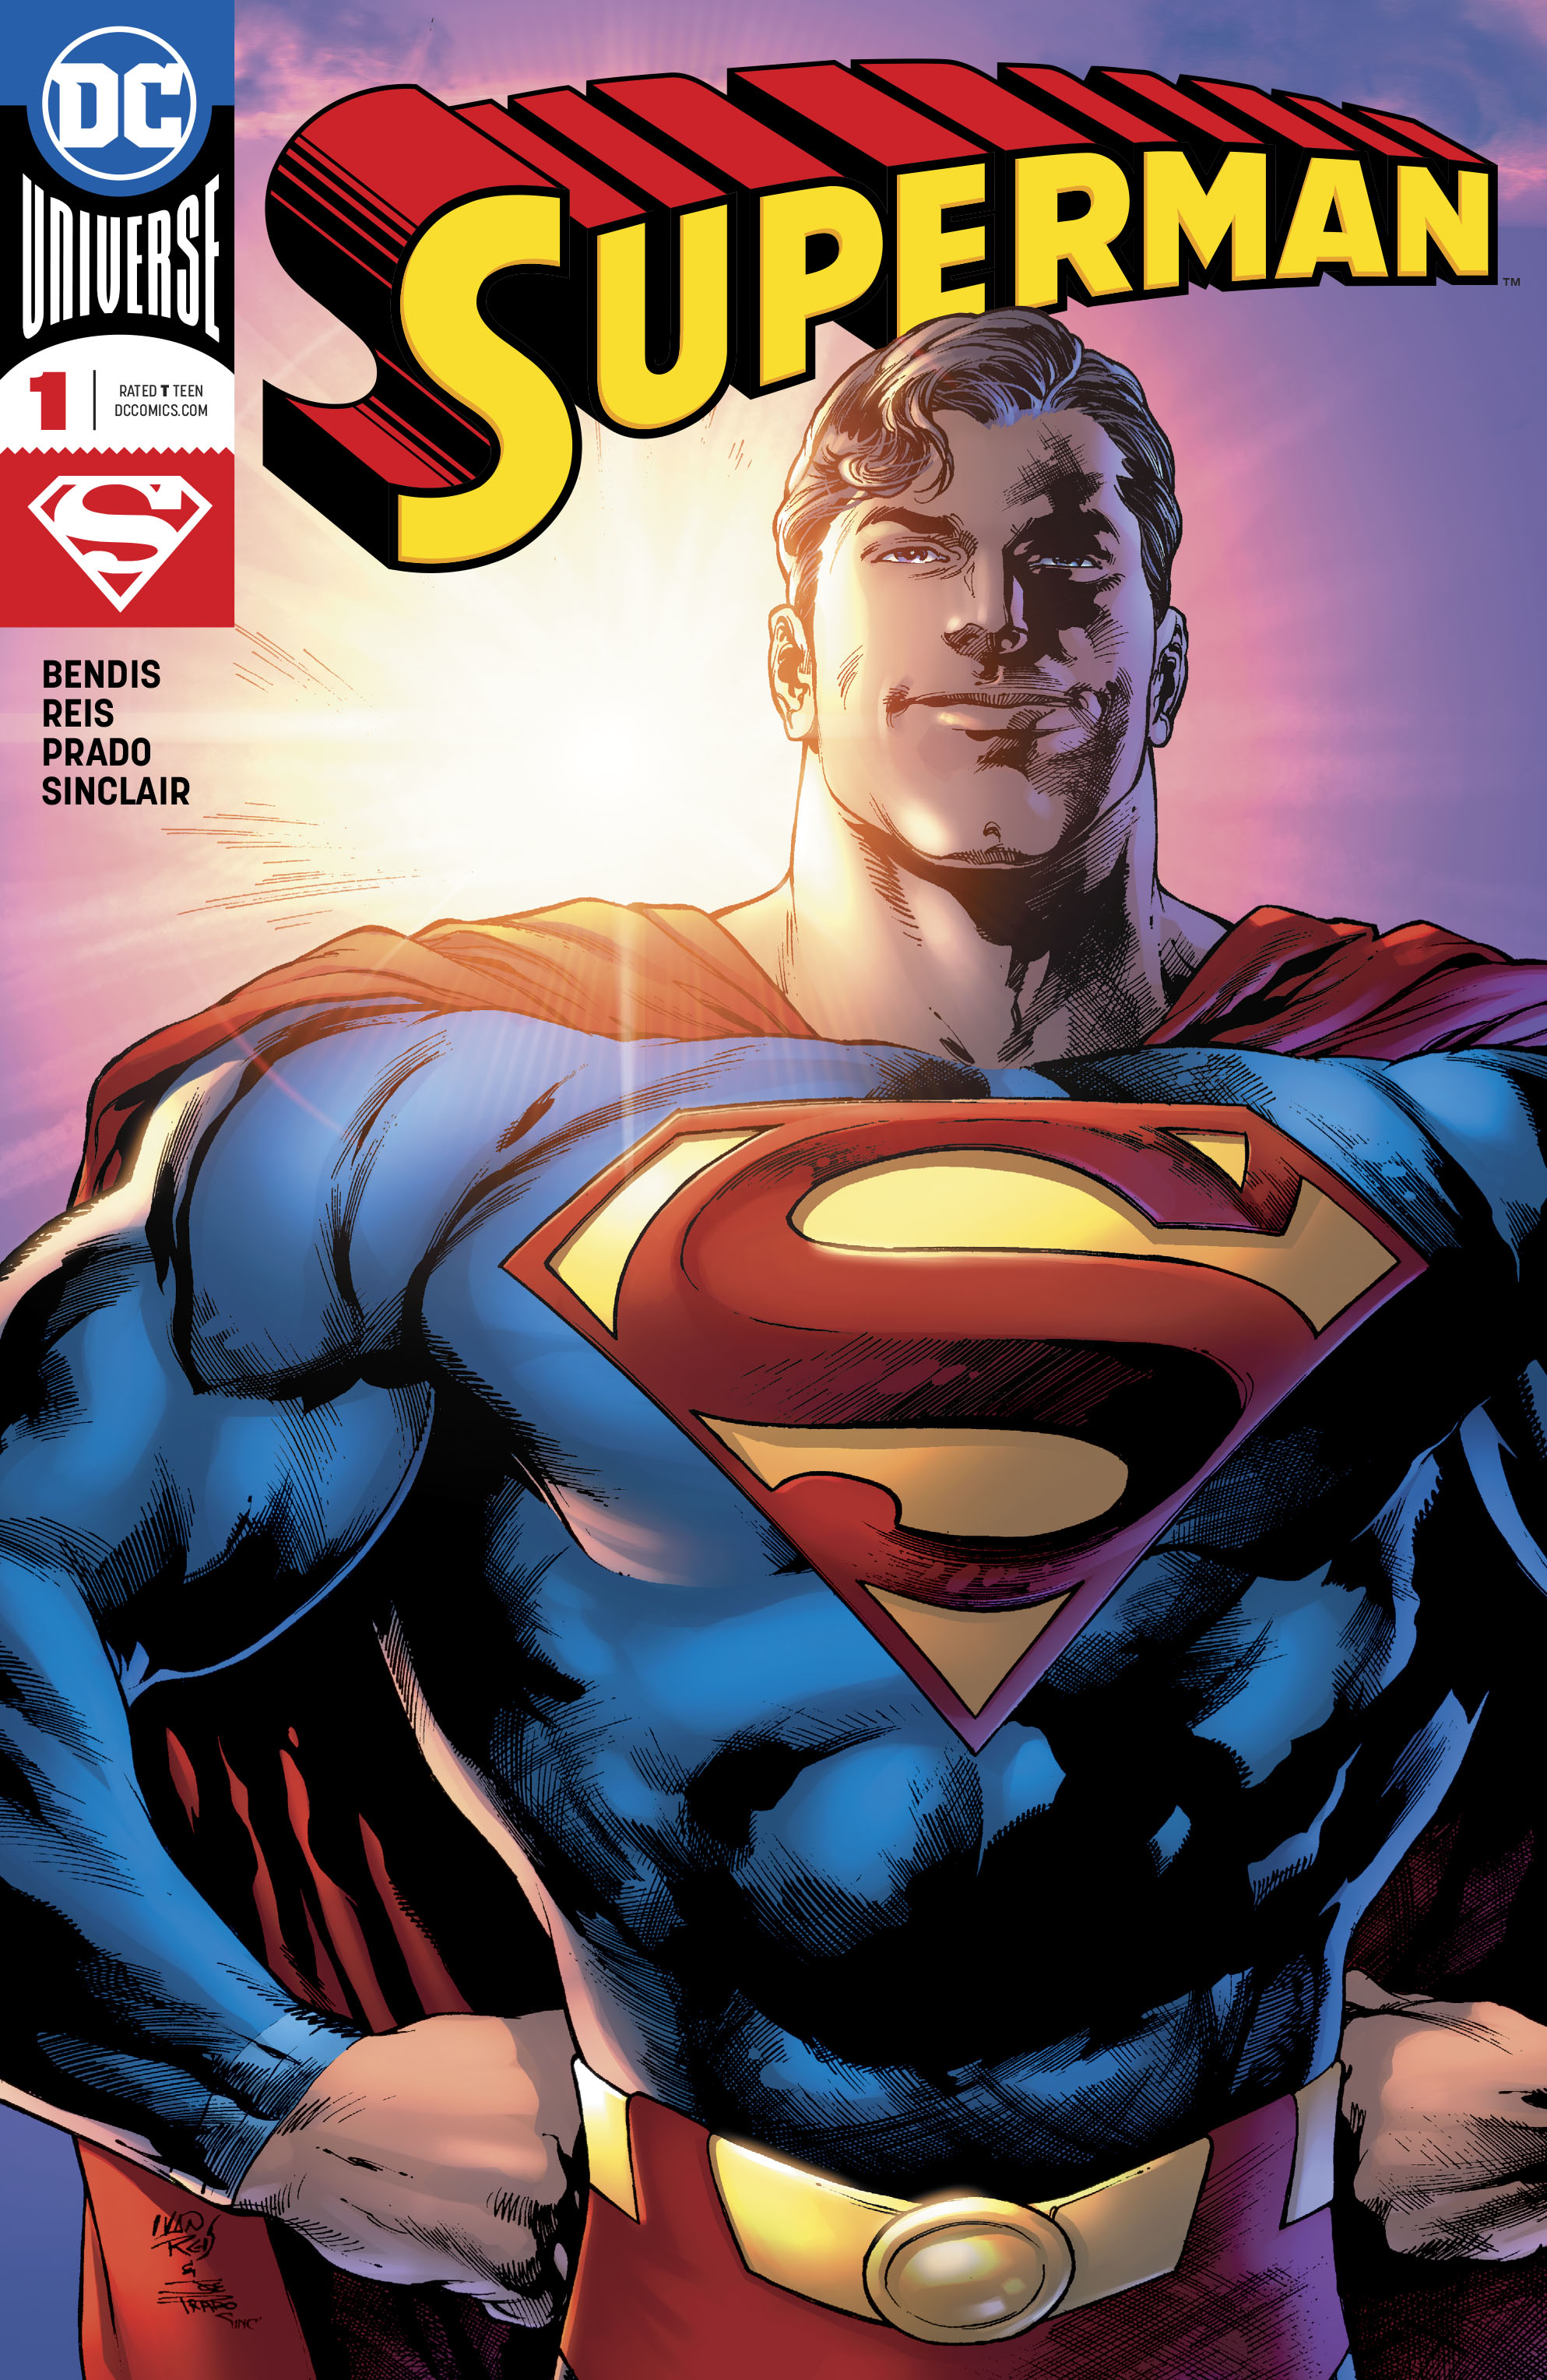 Read superman comics online for free